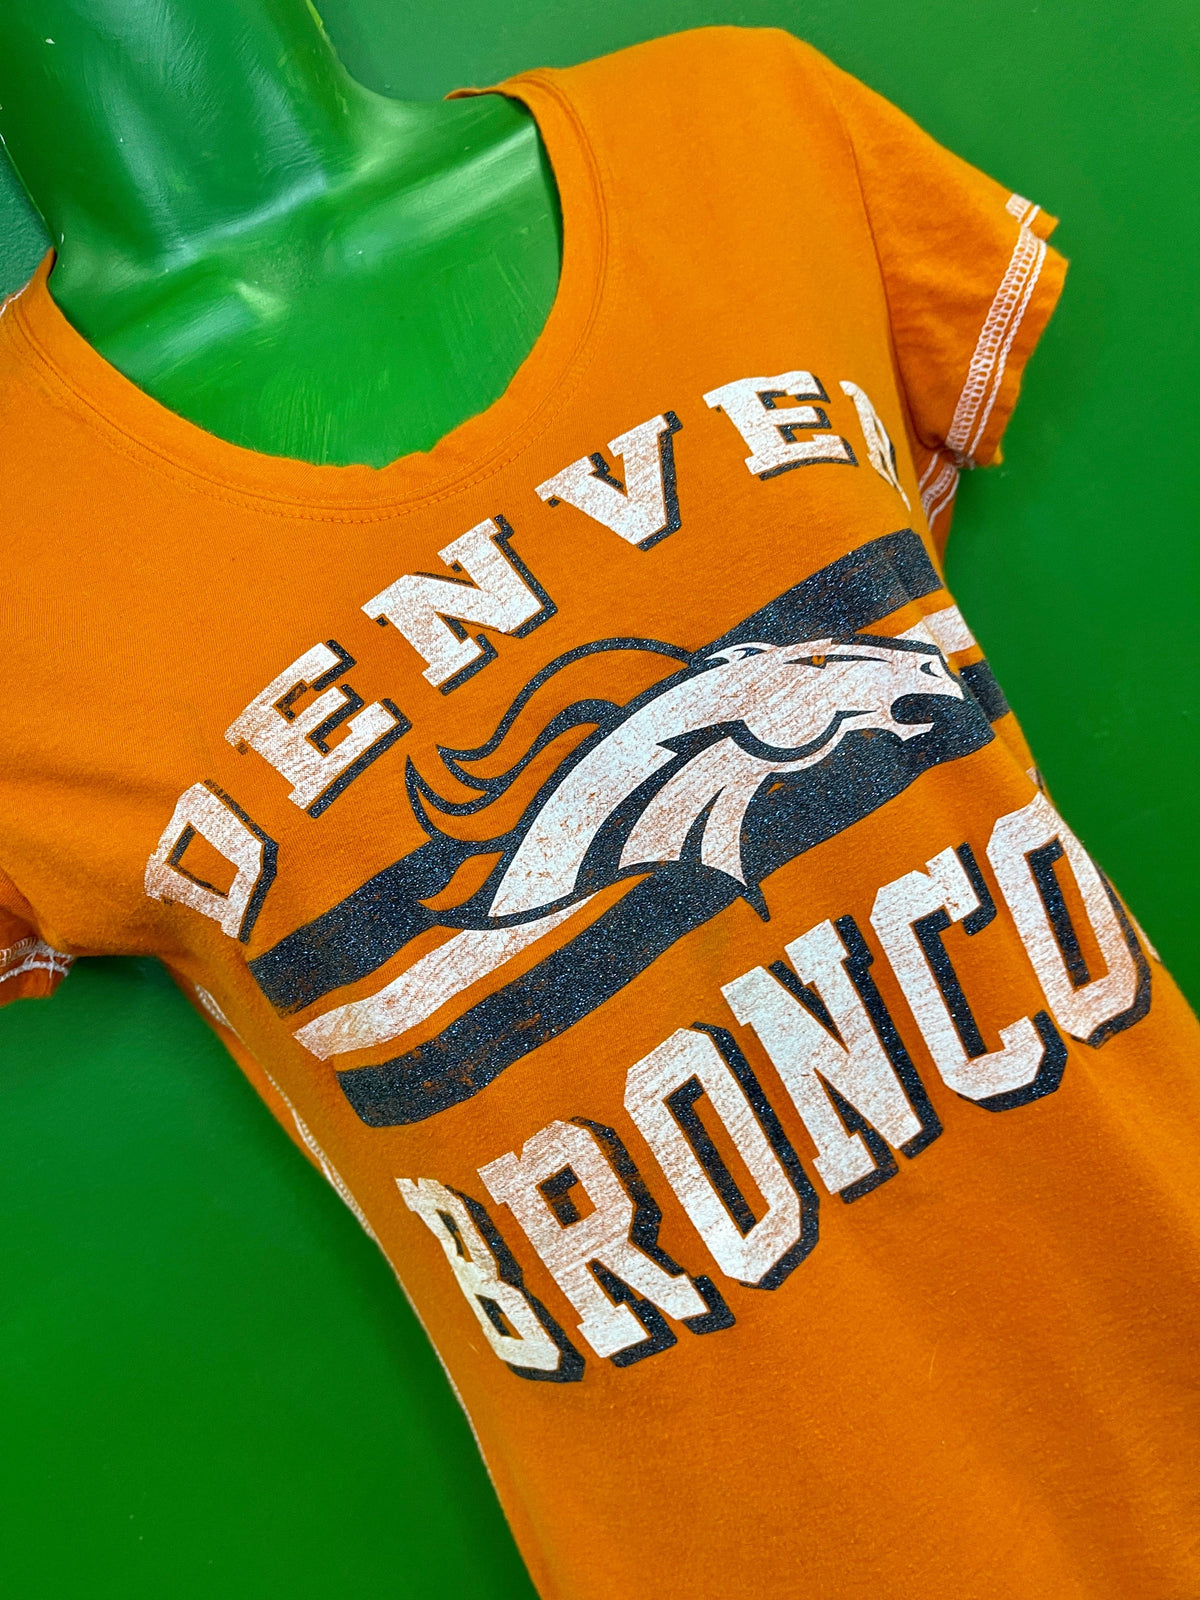 NFL Denver Broncos Orange Sparkle T-Shirt Women's Small